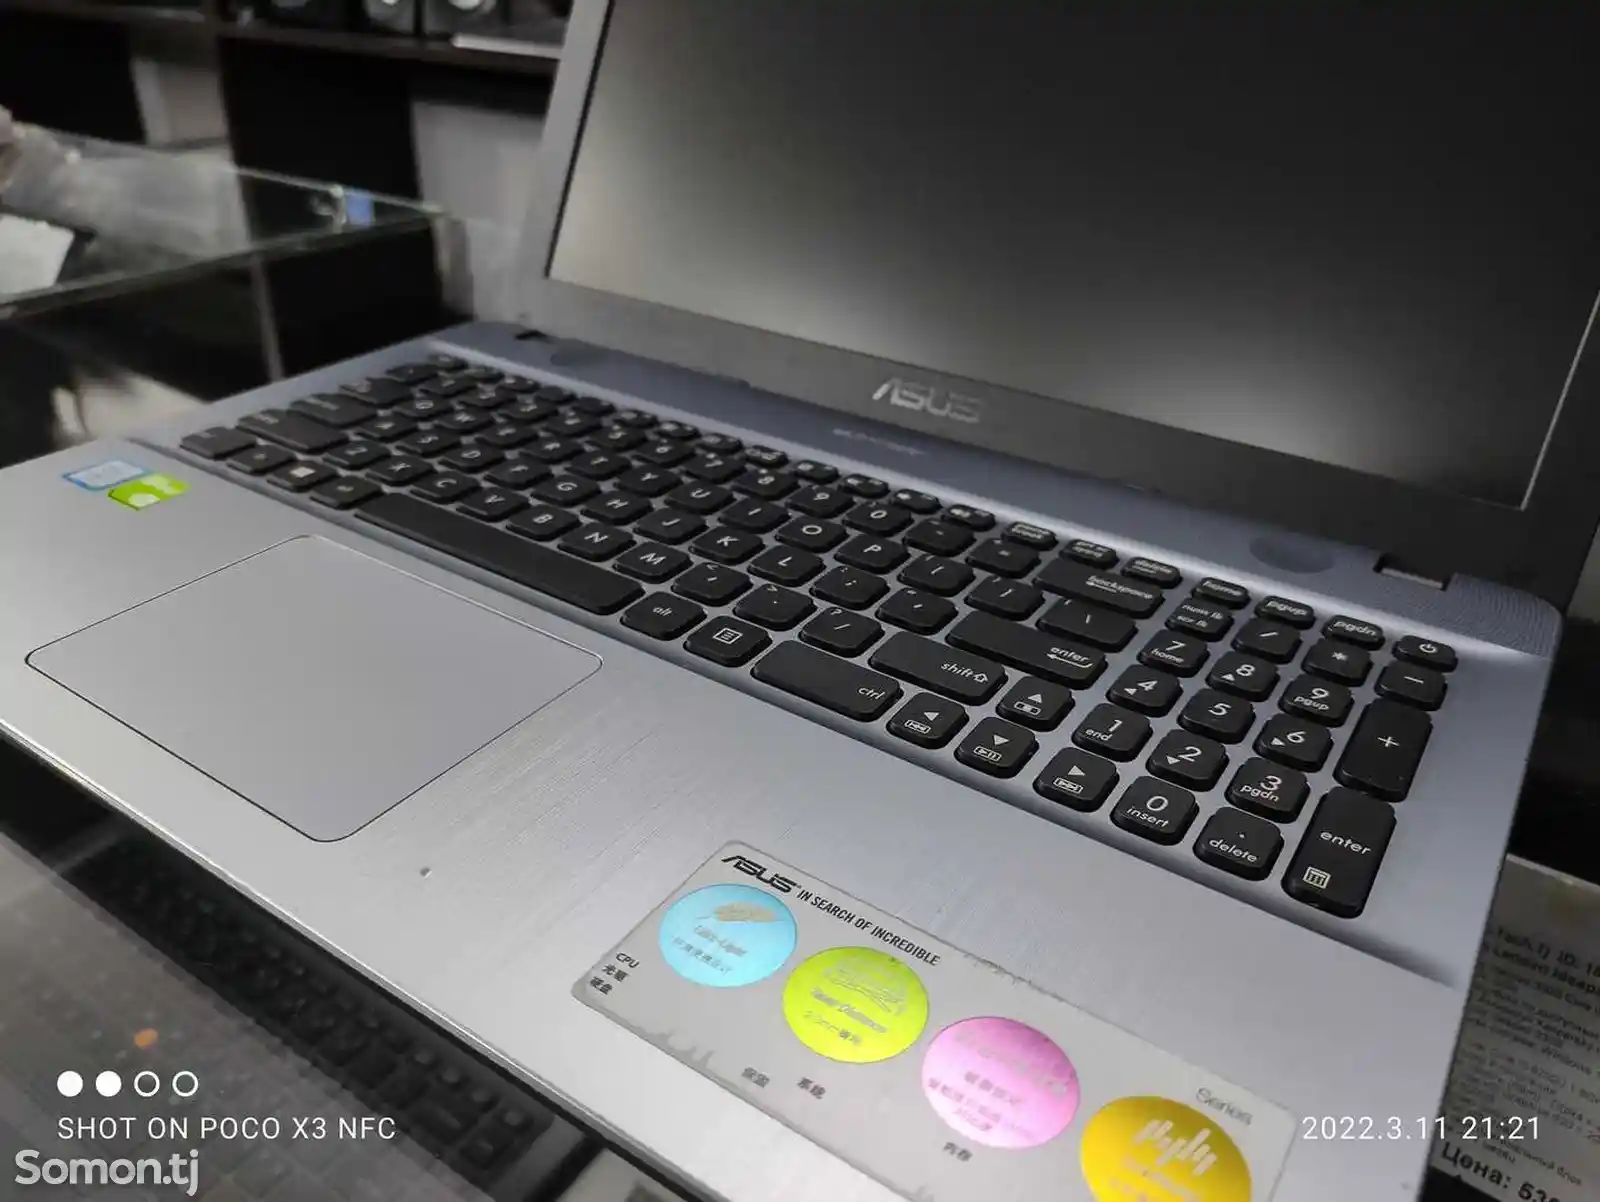 Игровой ноутбук Asus X541UJ Core i7-7500U 2.9GHz 8gb/256gb SSD 7TH GEN-6